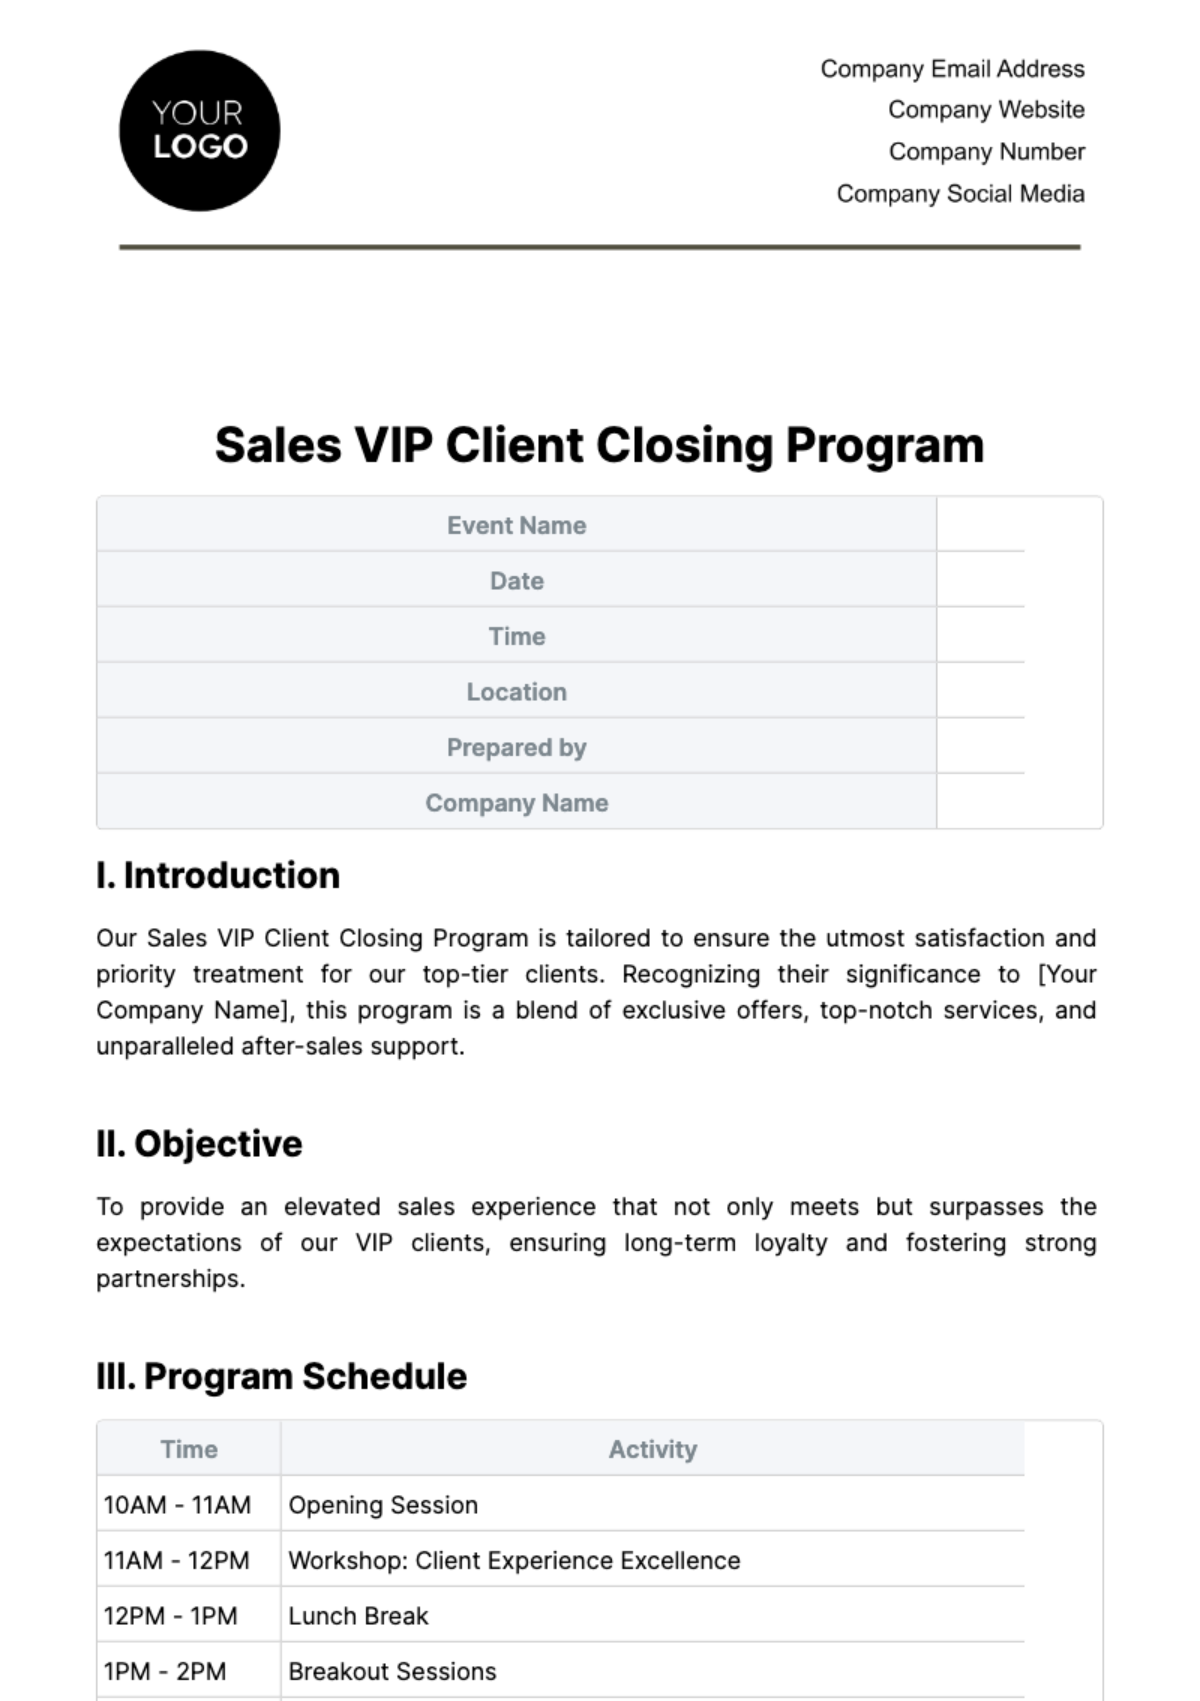 Sales VIP Client Closing Program Template